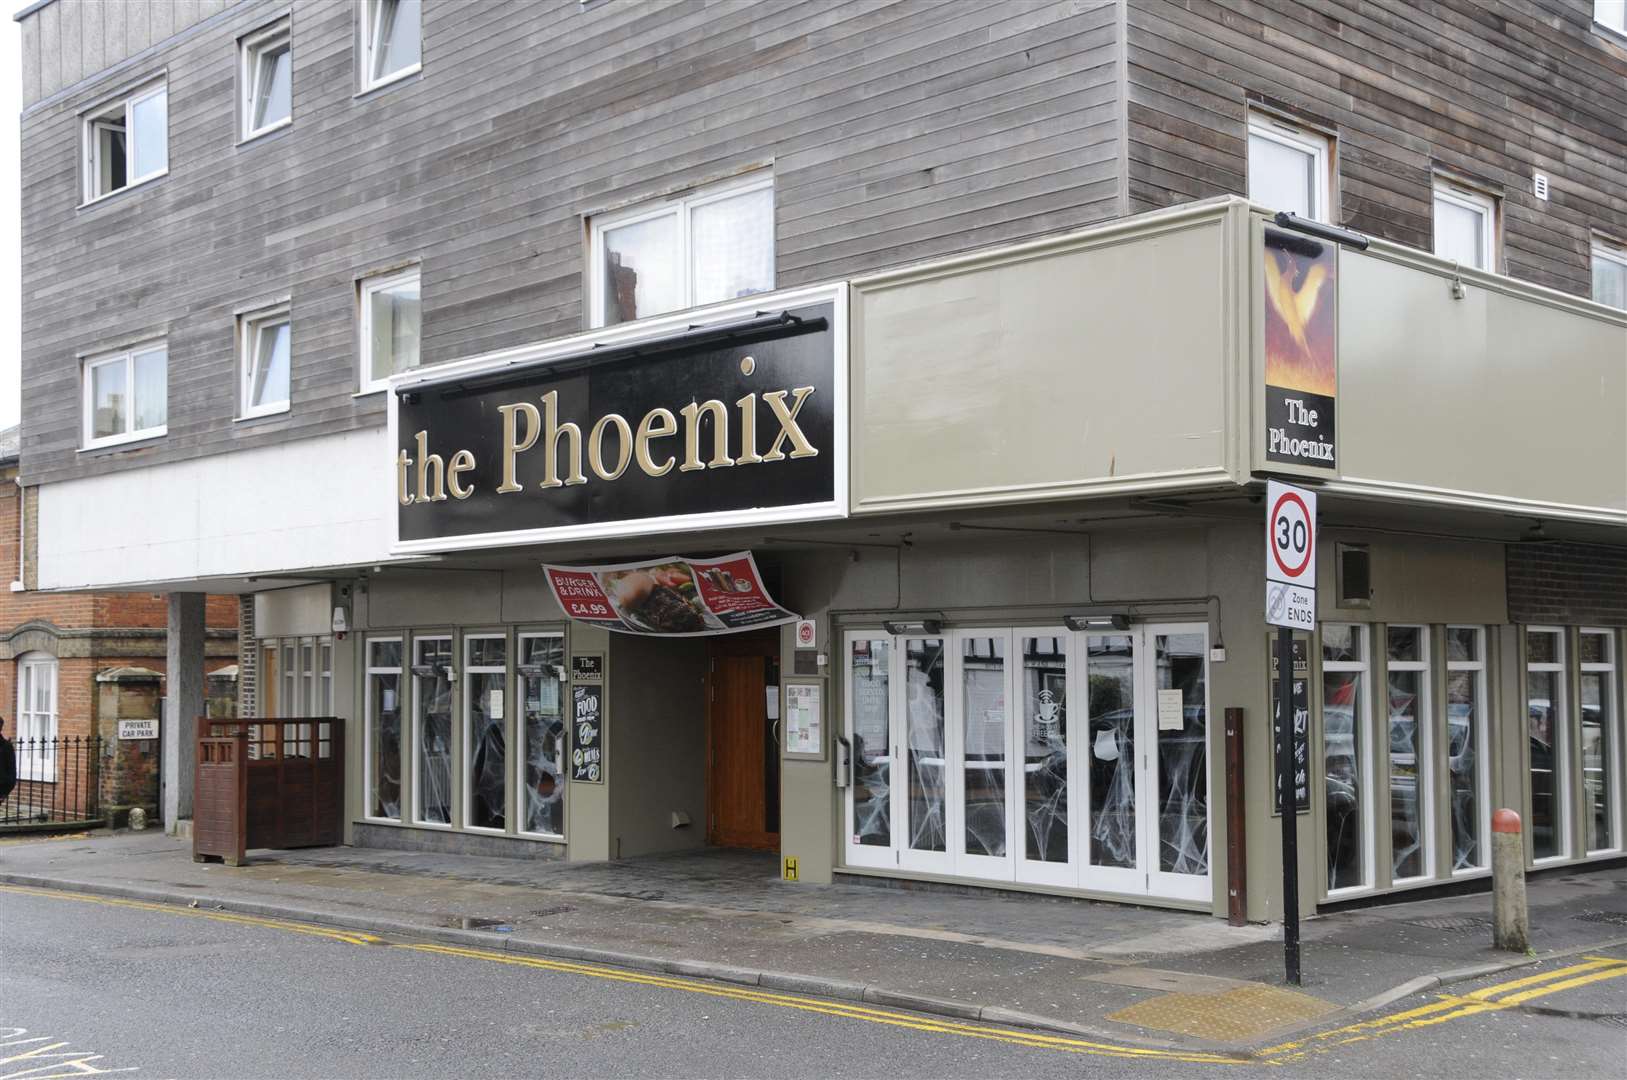 The Phoenix pub